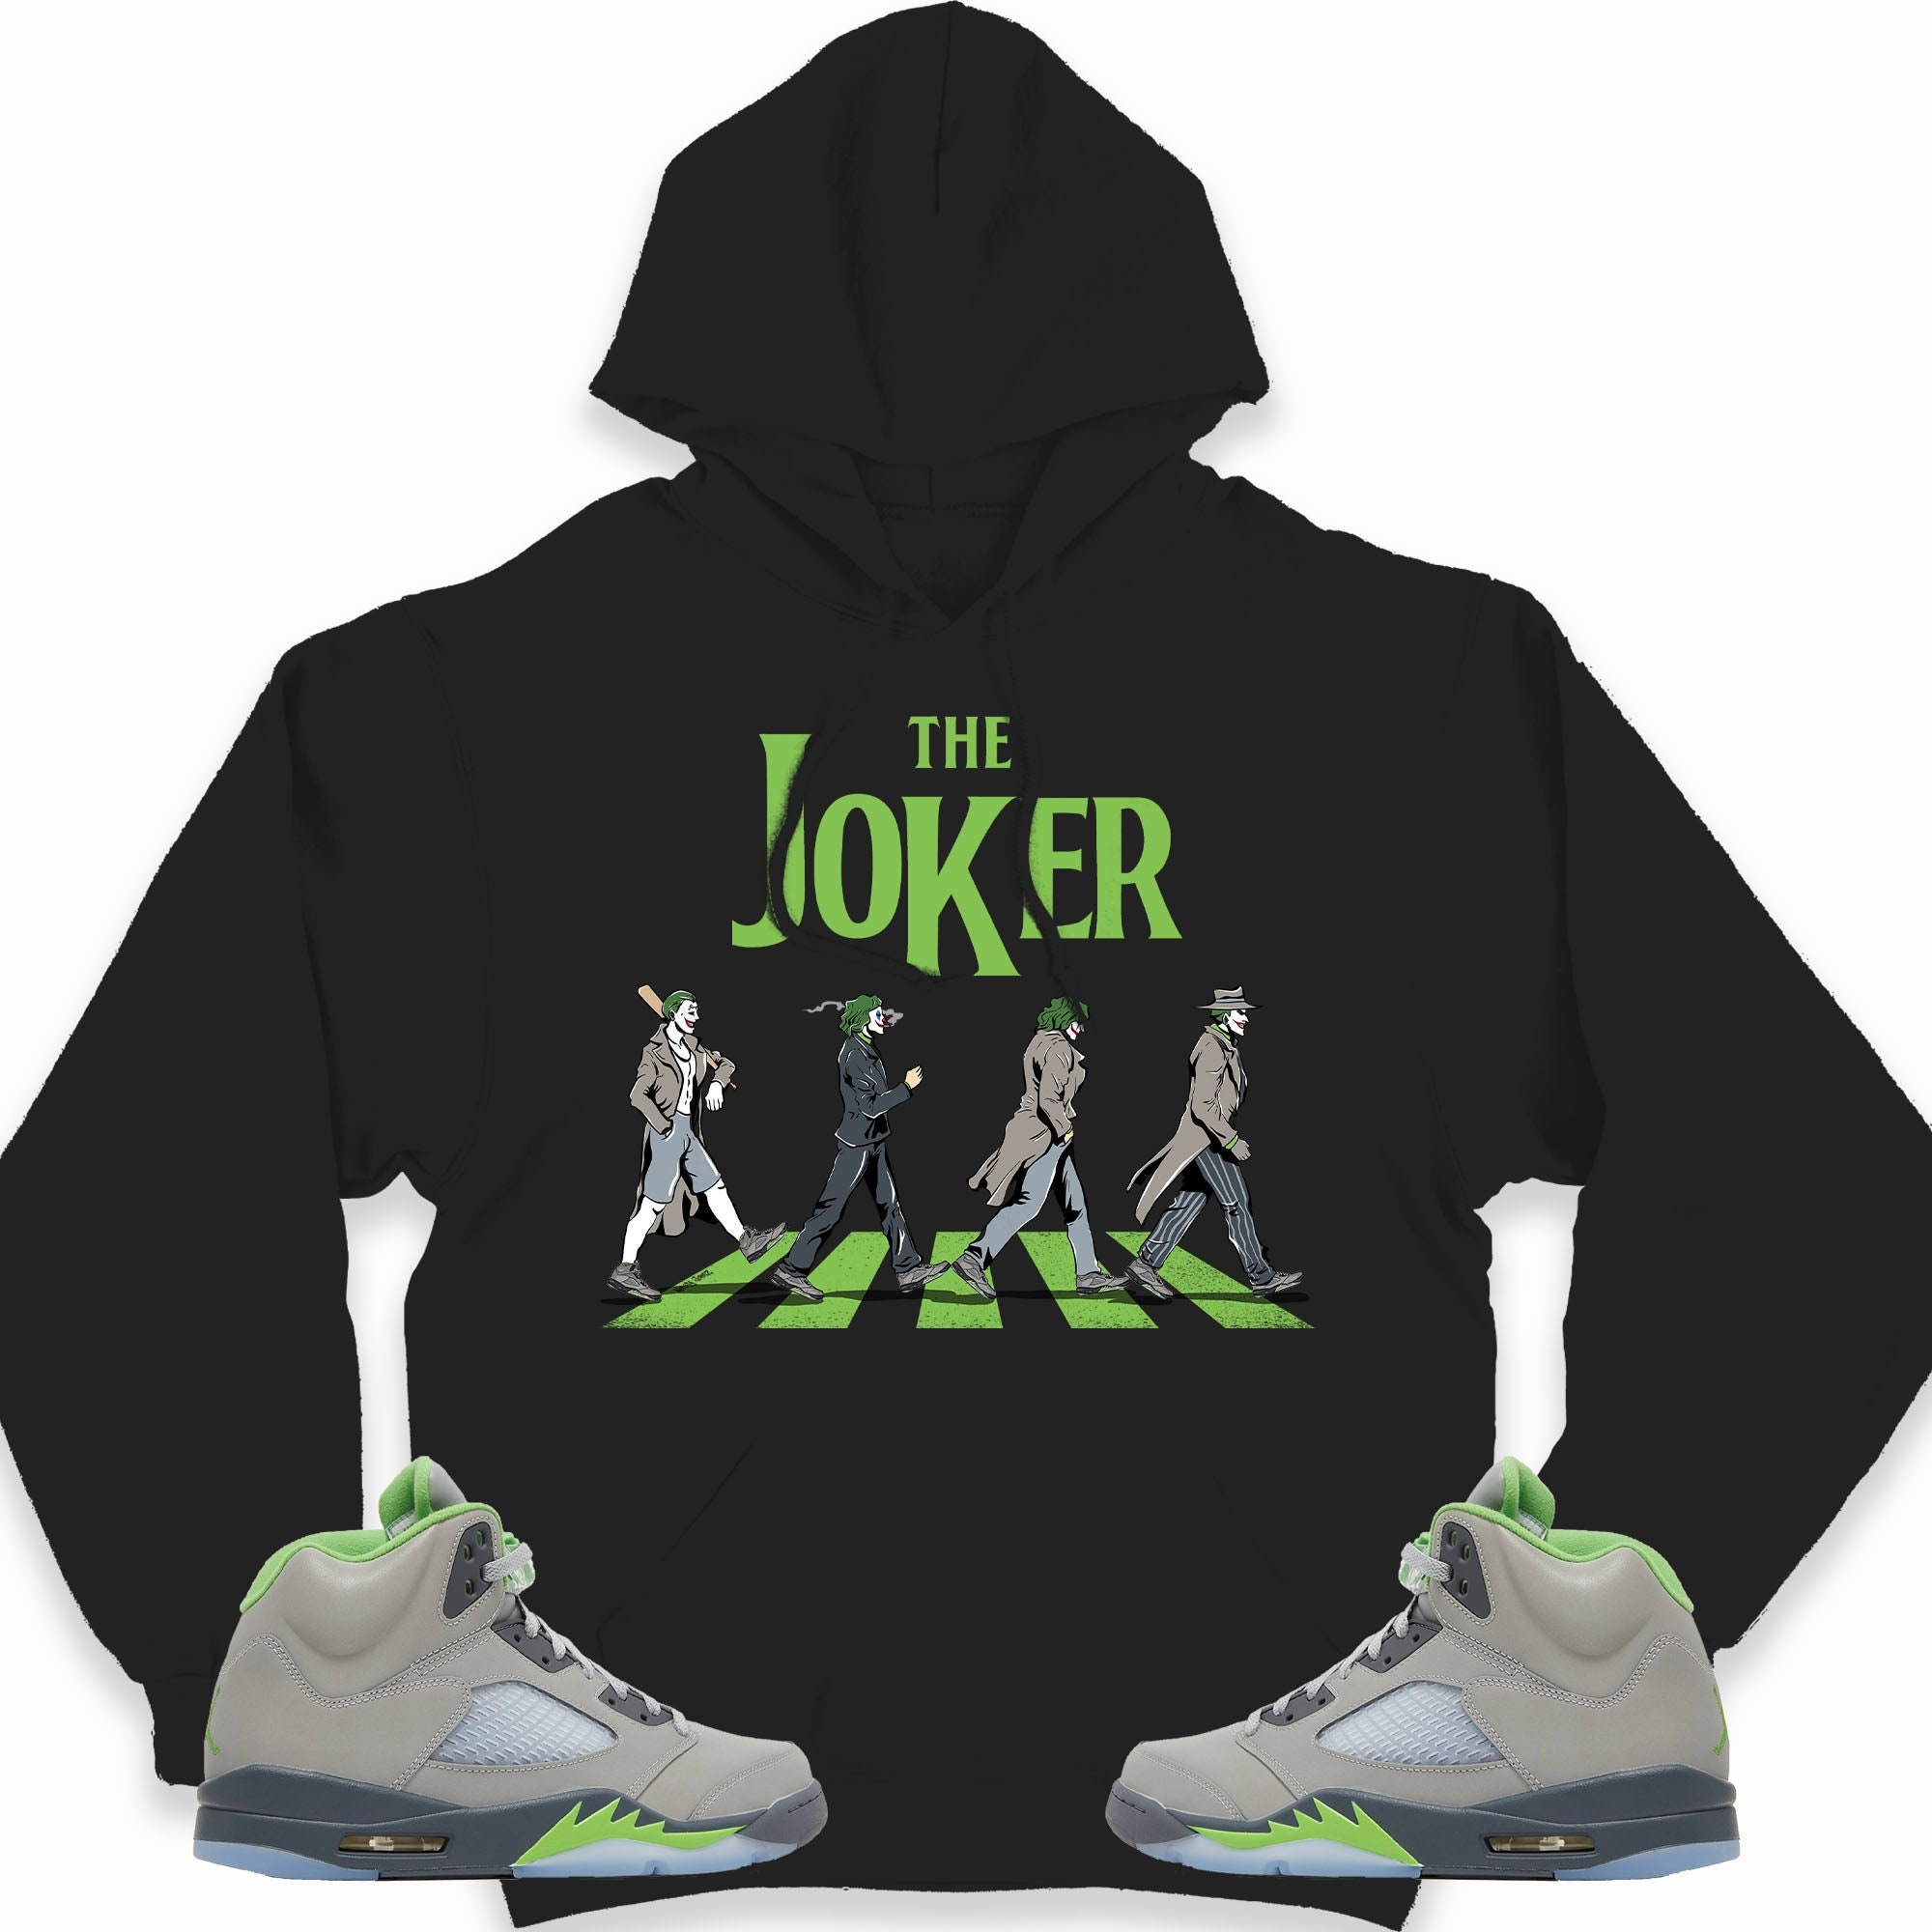 The Joker Unisex Hoodie Match Jordan 5 Retro Green Bean